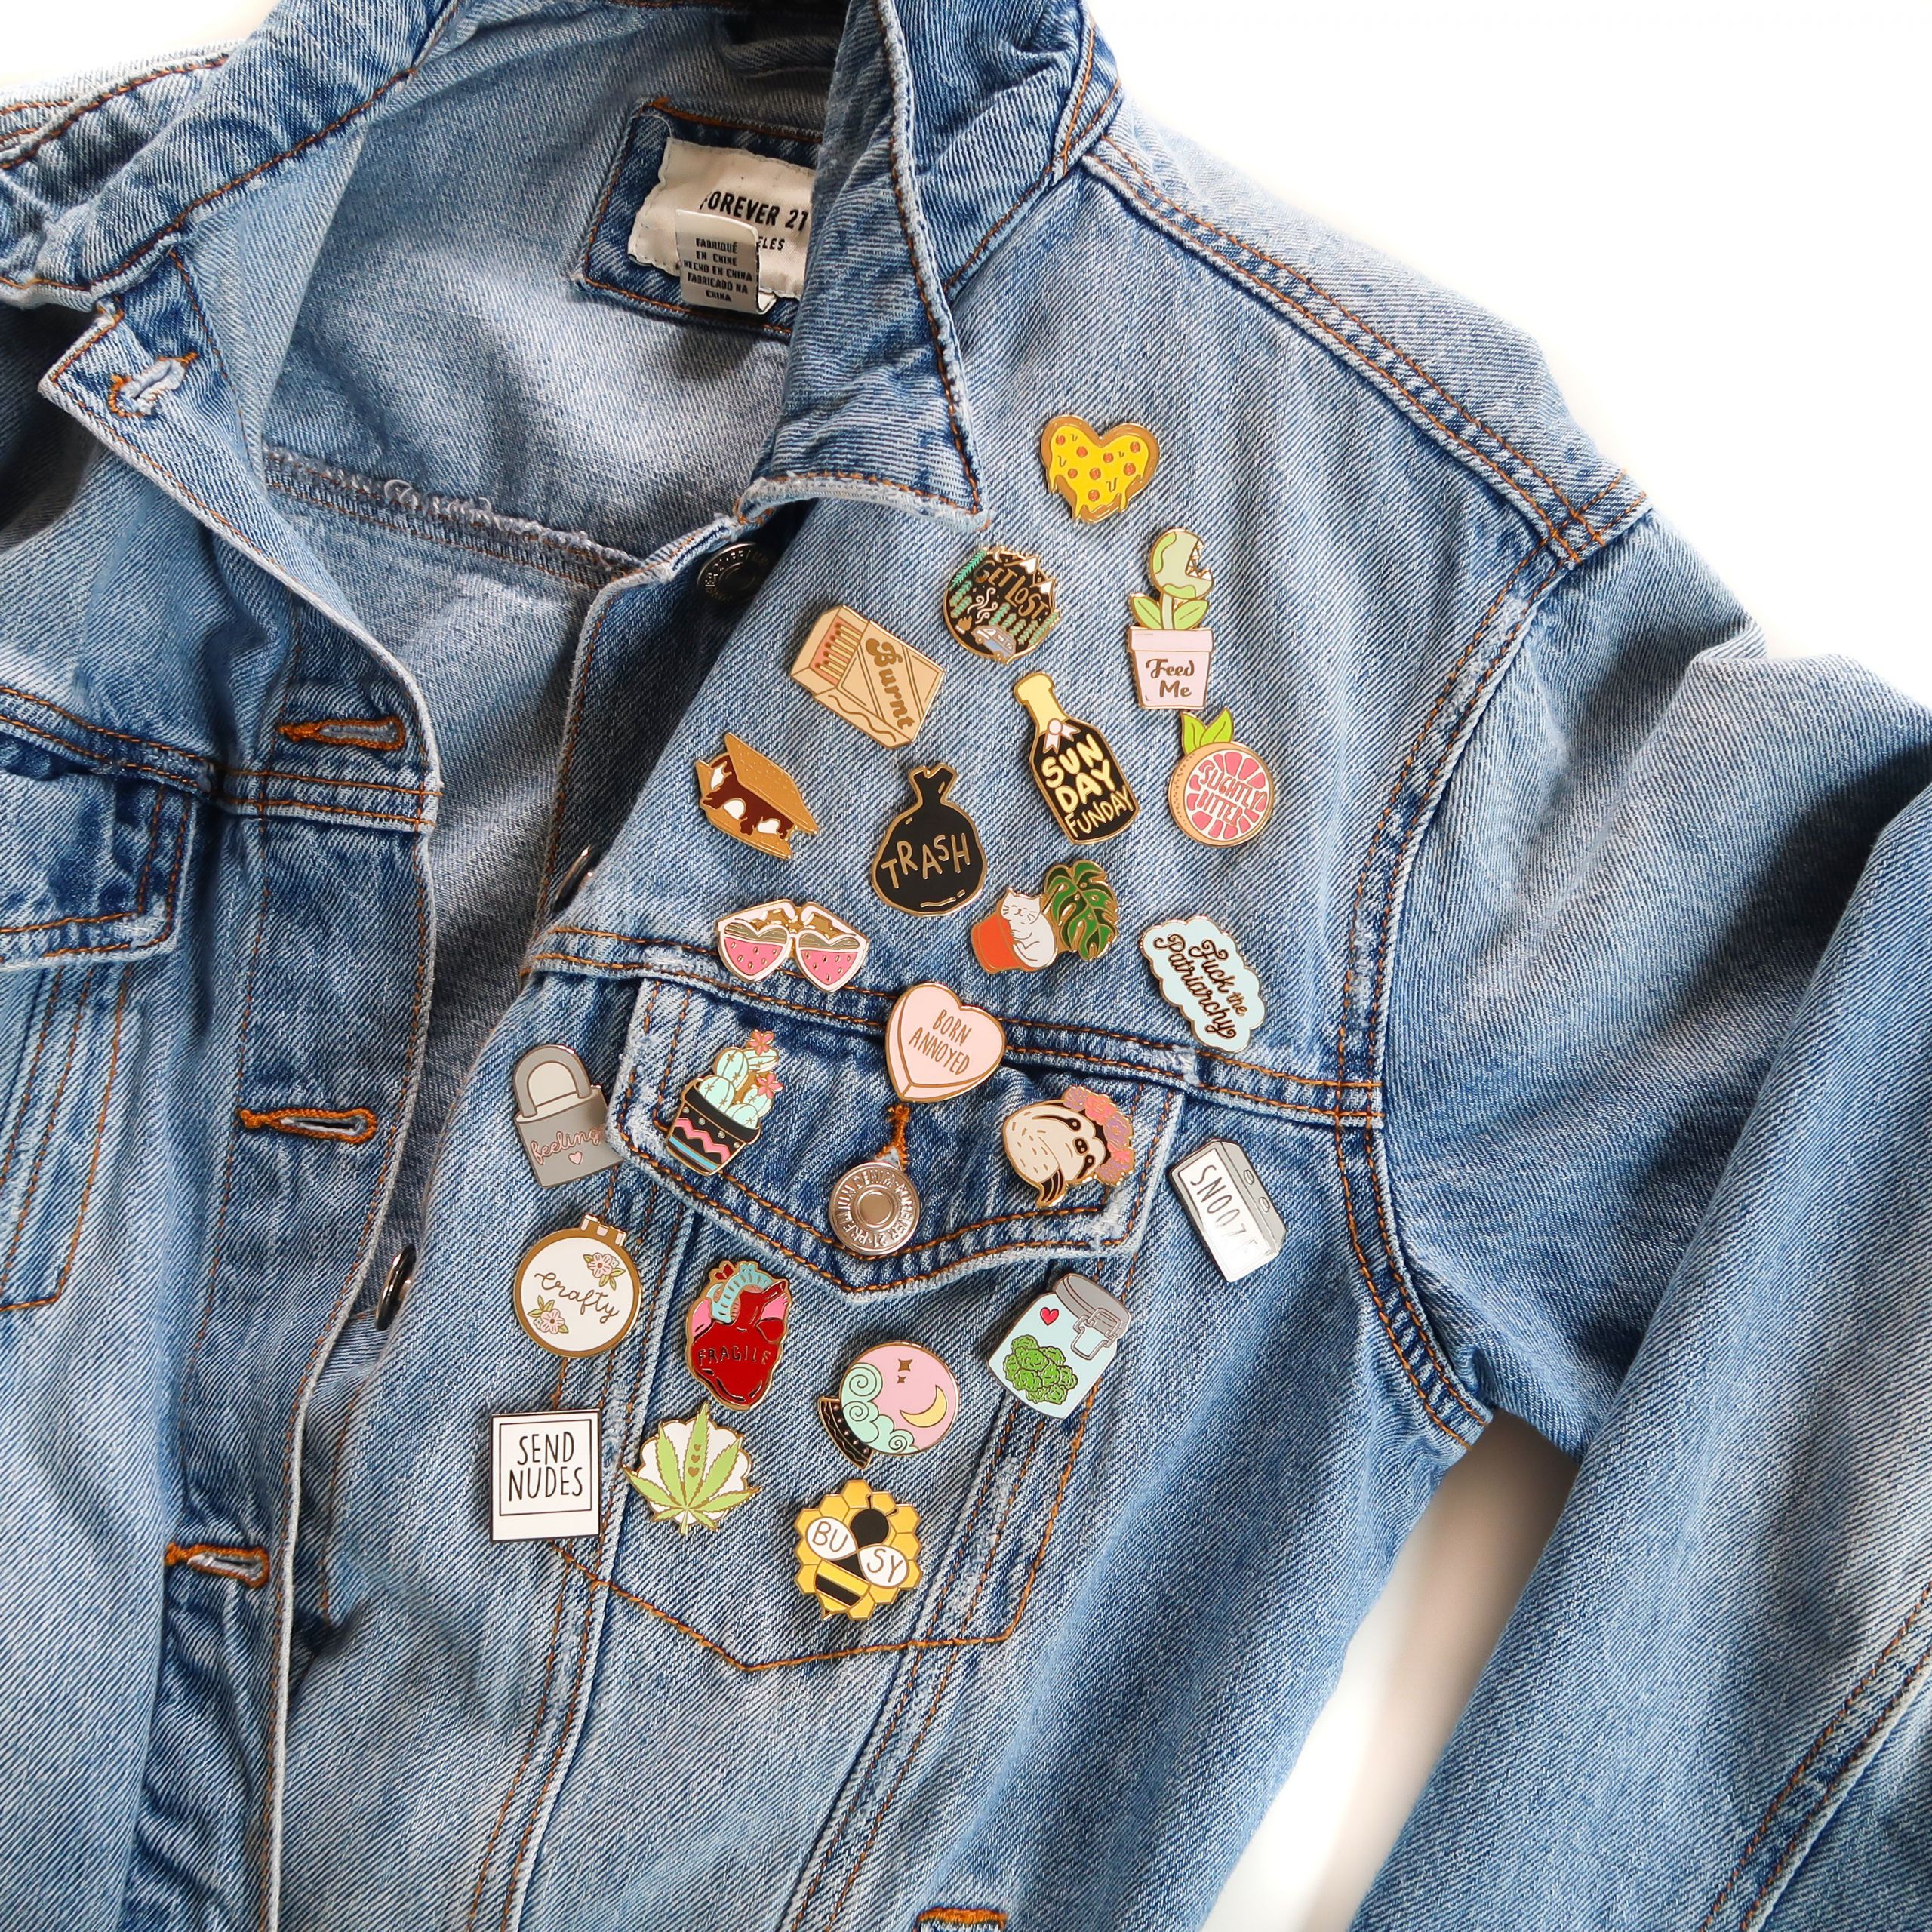 Pins On Denim Jacket
 Enamel Pins styles on jean jacket outfit jeanajacket